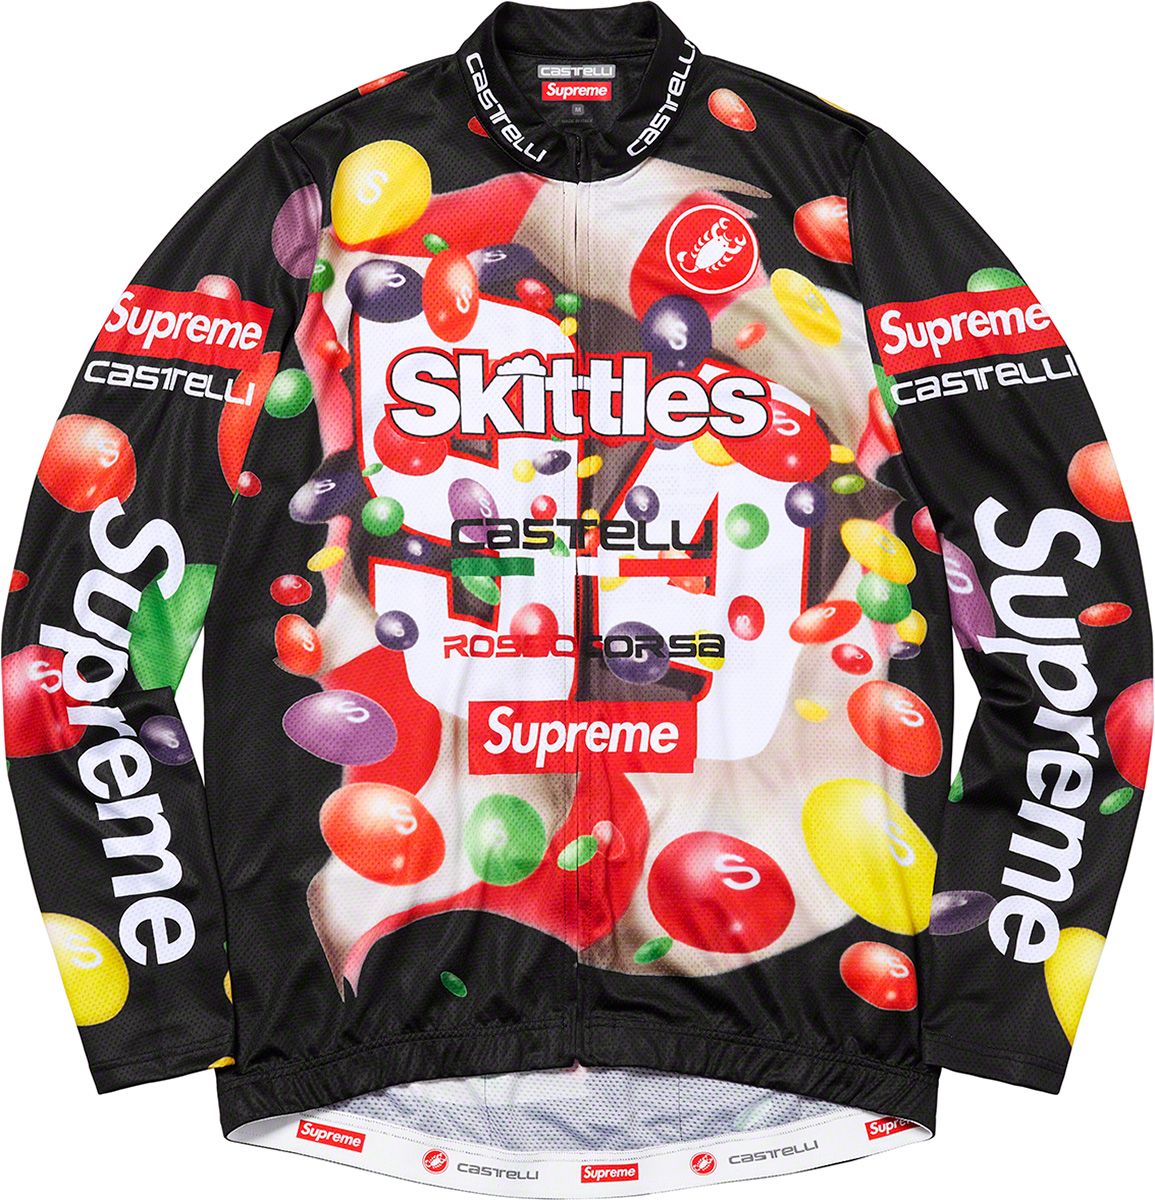 Supreme®/Skittles®/<wbr>Castelli L/S Cycling Jersey - Fall/Winter